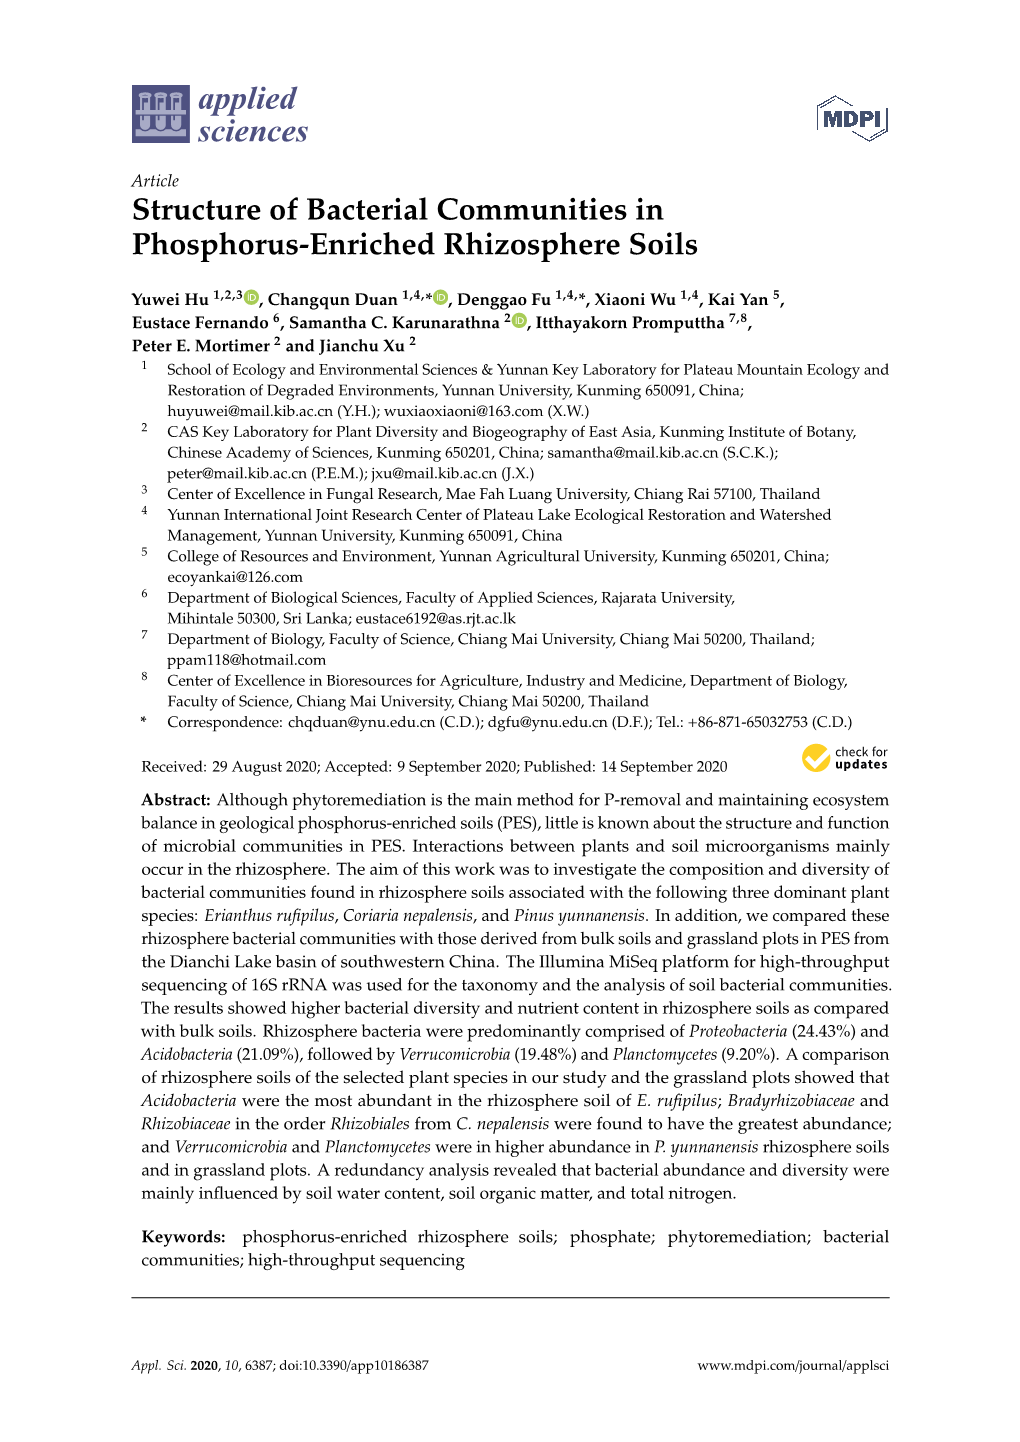 Structure of Bacterial Communities in Phosphorus-Enriched Rhizosphere Soils